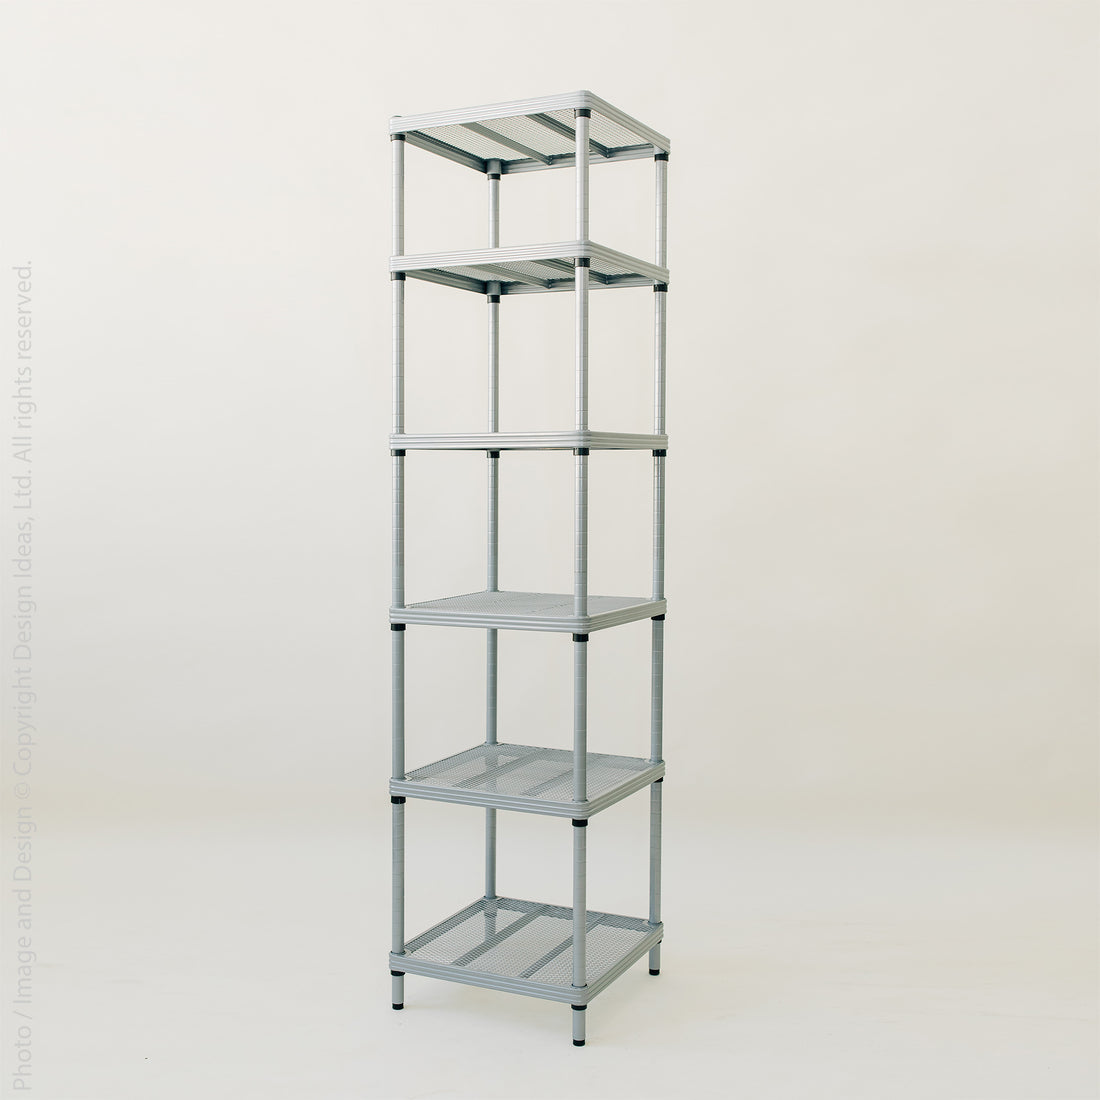 MeshWorks® epoxy coated steel narrow shelving unit, 6 tier